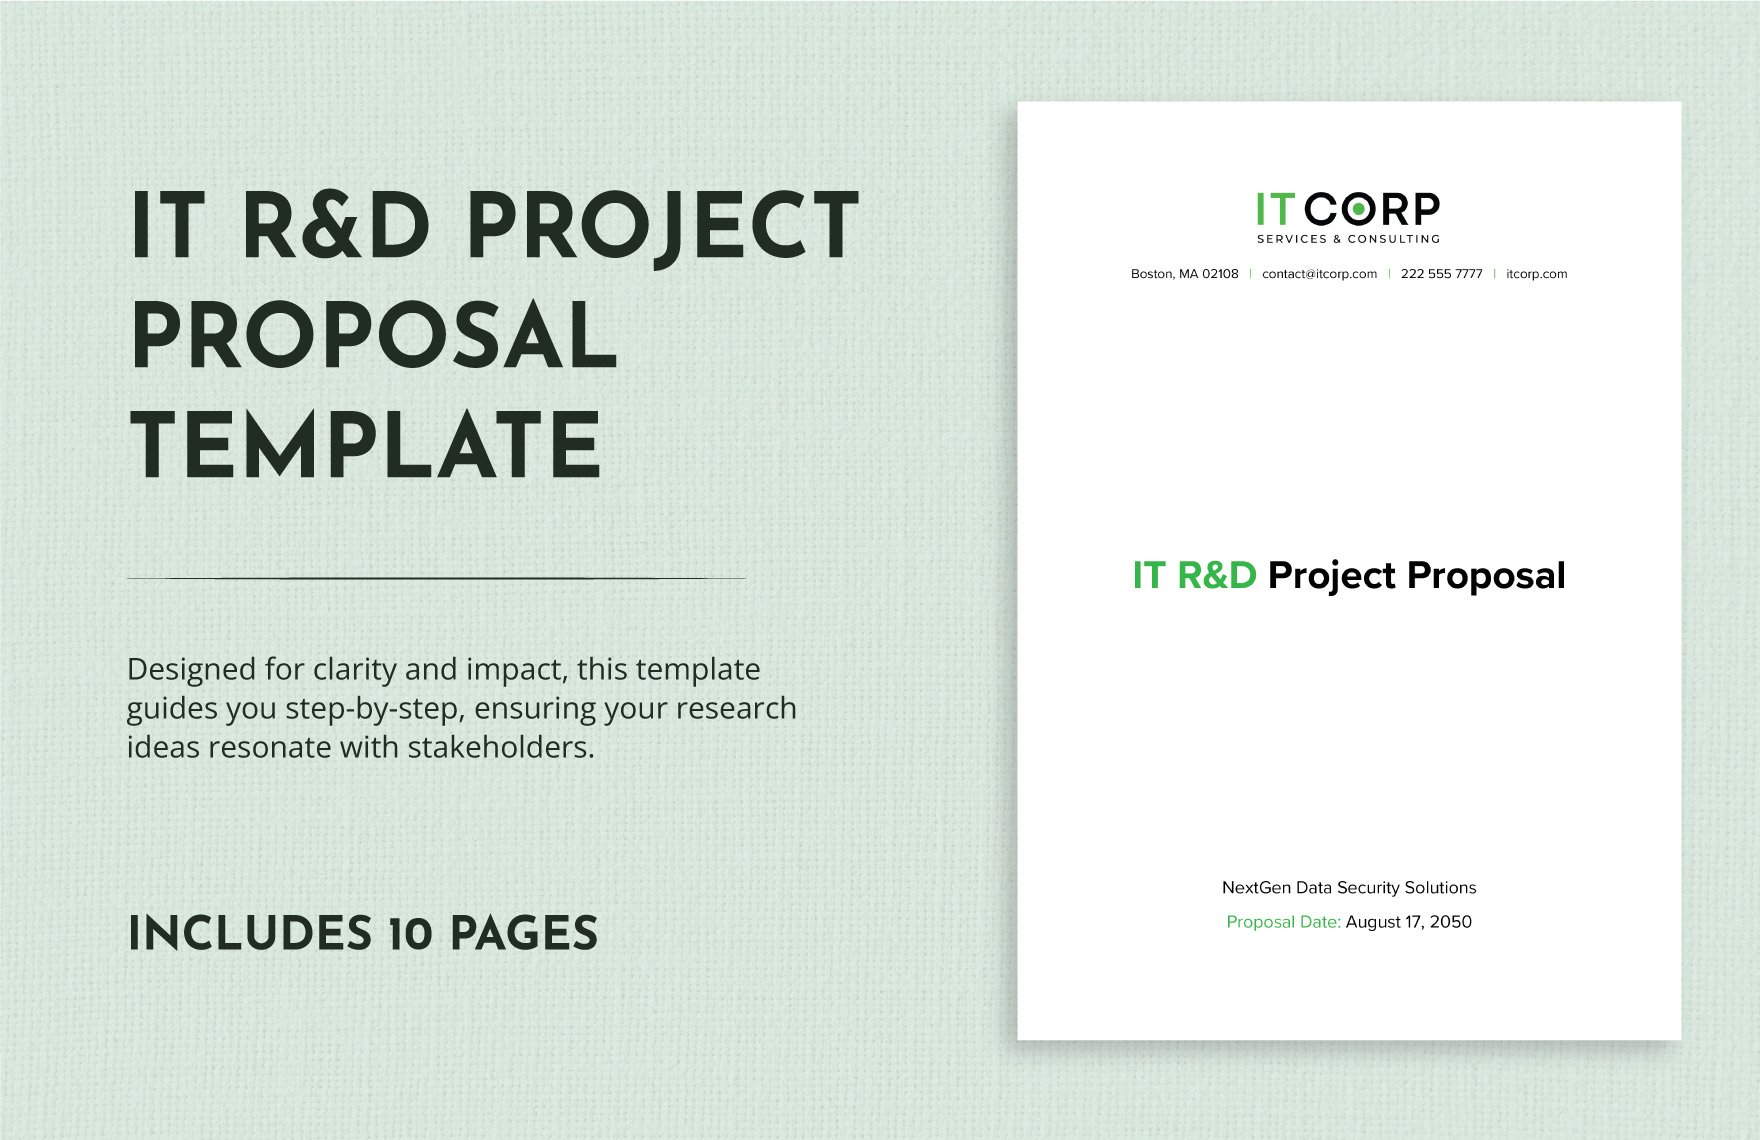 IT R&D Project Proposal Template